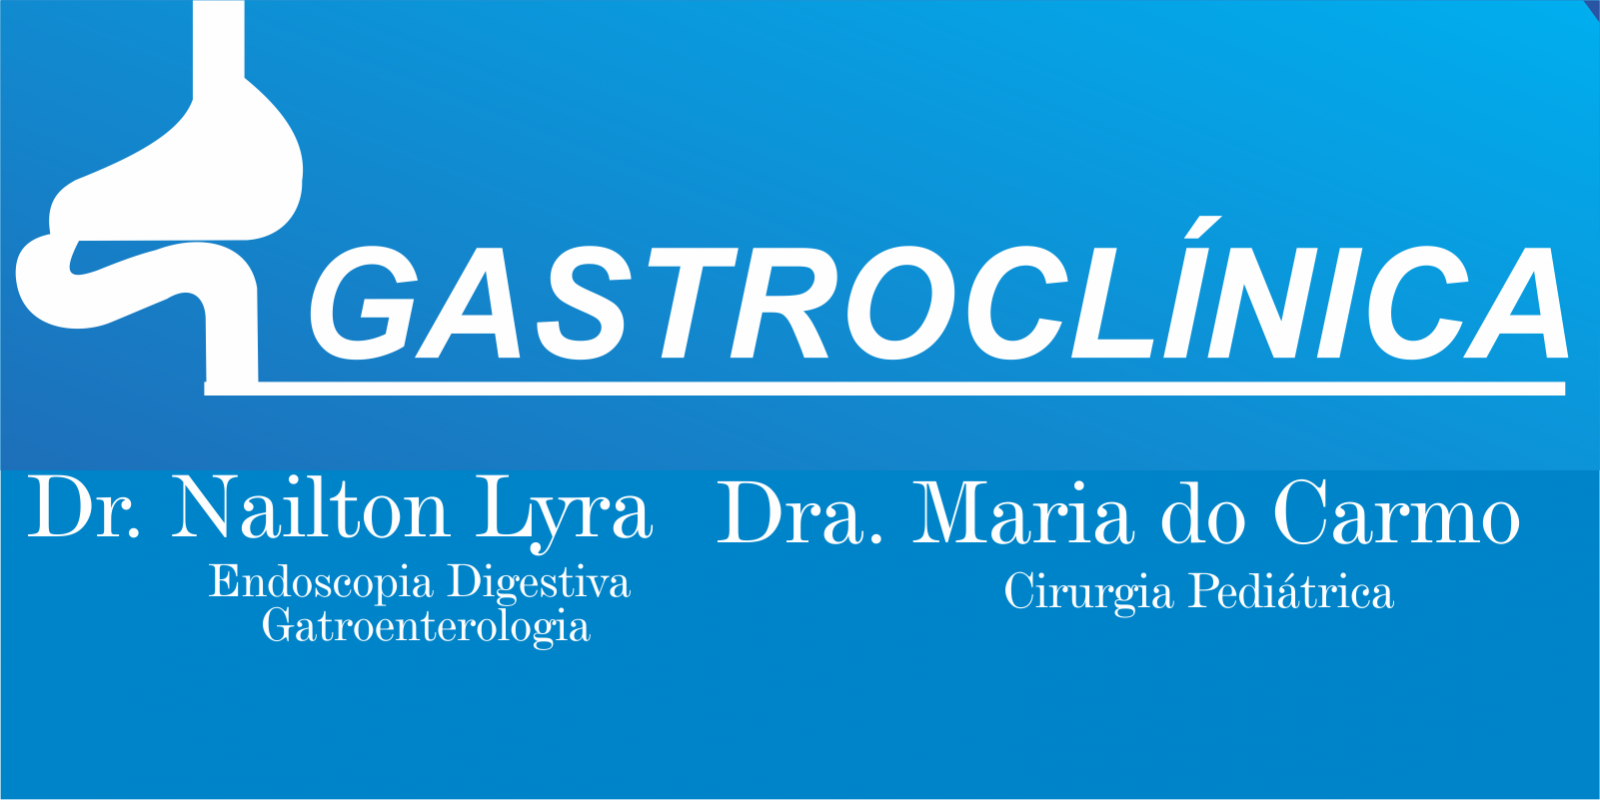 Gastroclinica